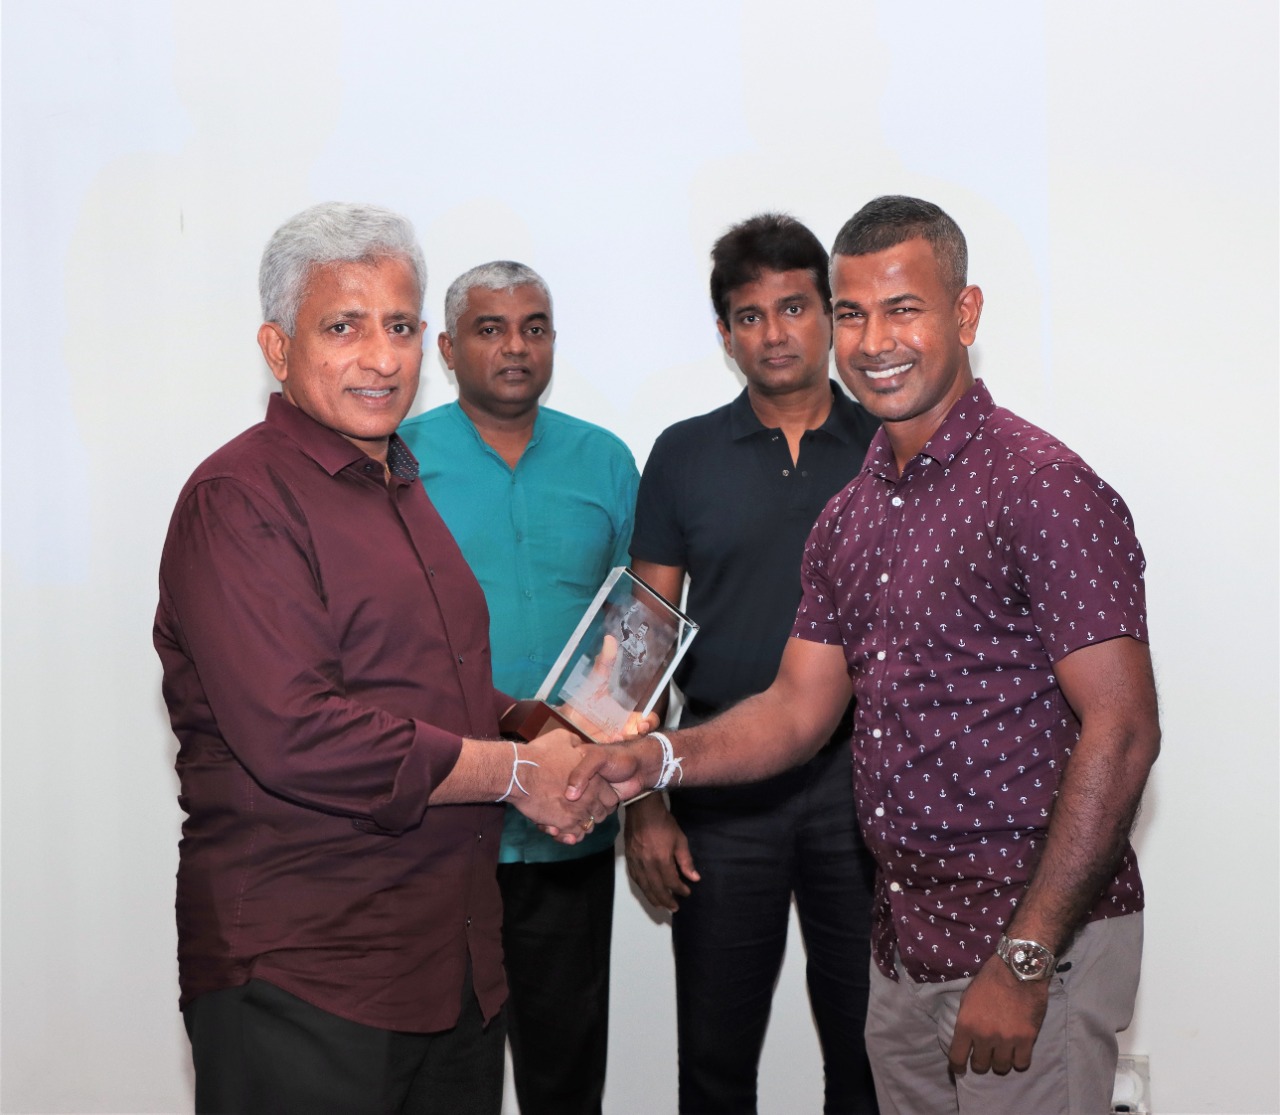 Felicitation of Nuwan Kulasekara and appreciation of emerging players of colts cricket club